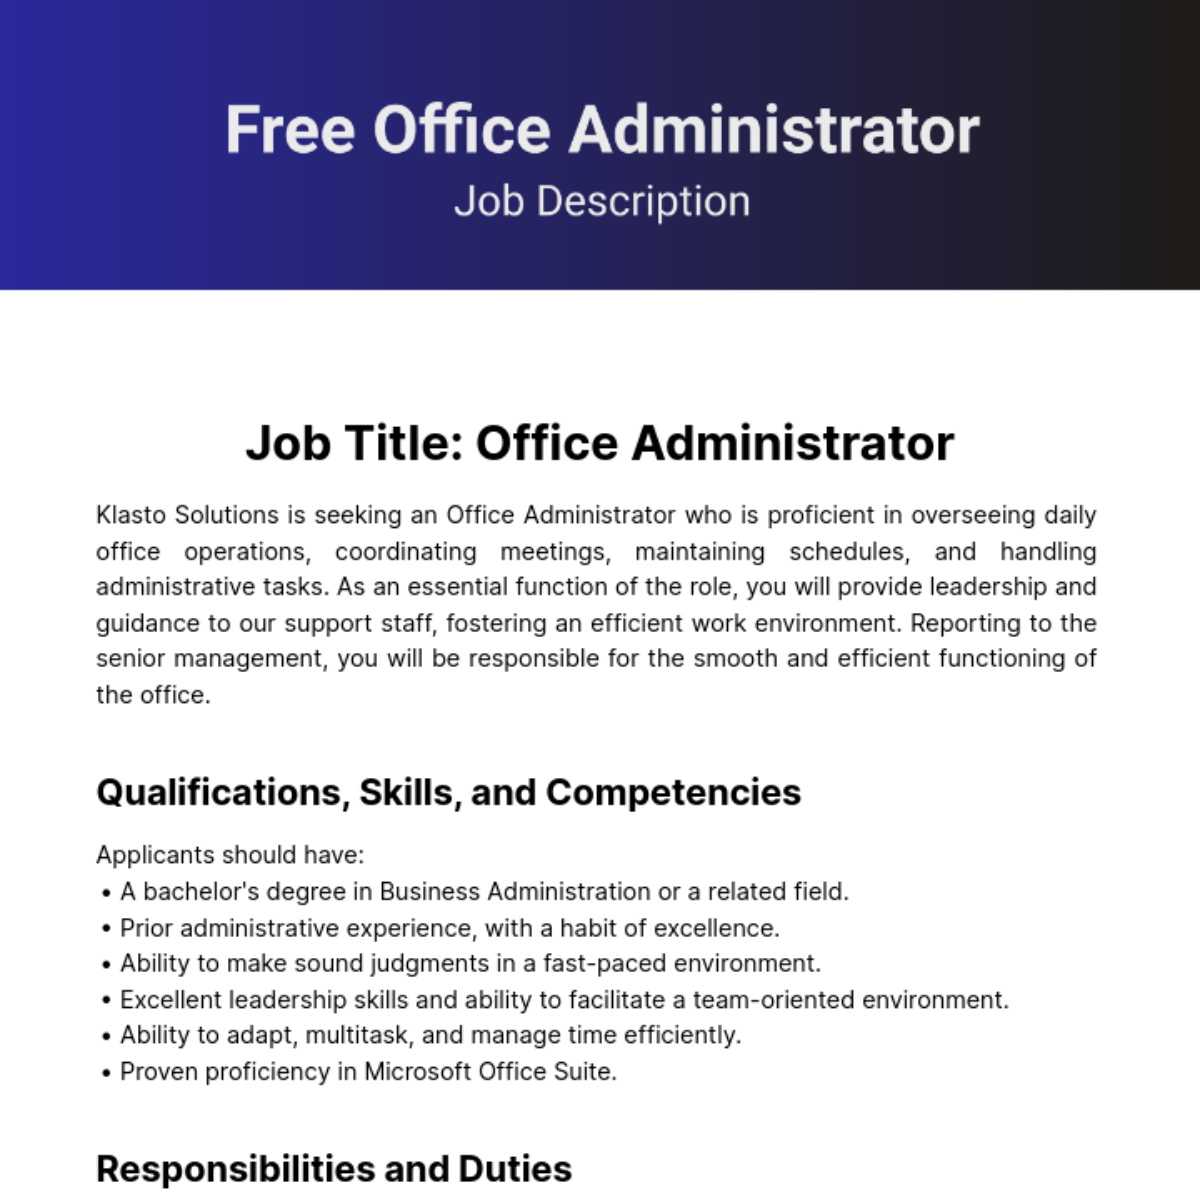 Free Office Administrator Job Description Template